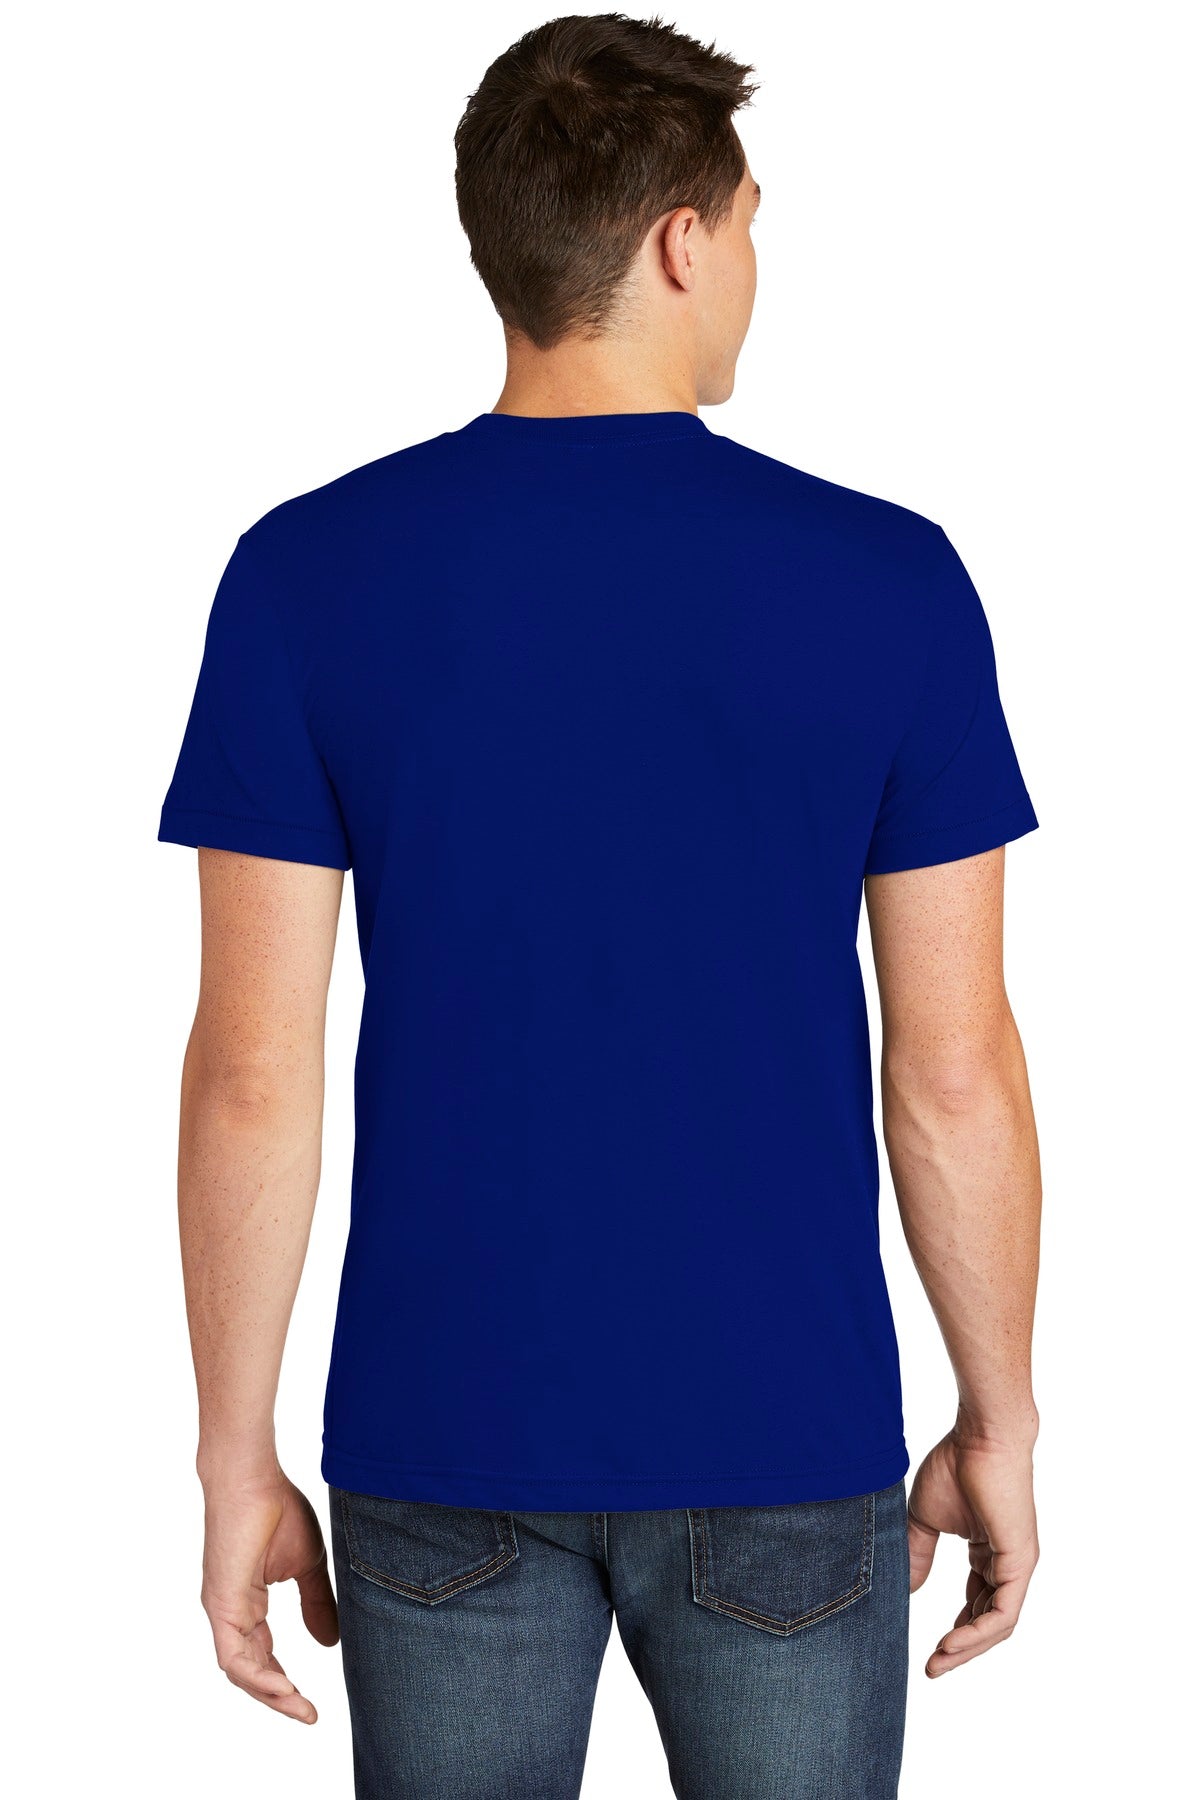 American Apparel ® Poly-Cotton T-Shirt. BB401W [Lapis] - DFW Impression